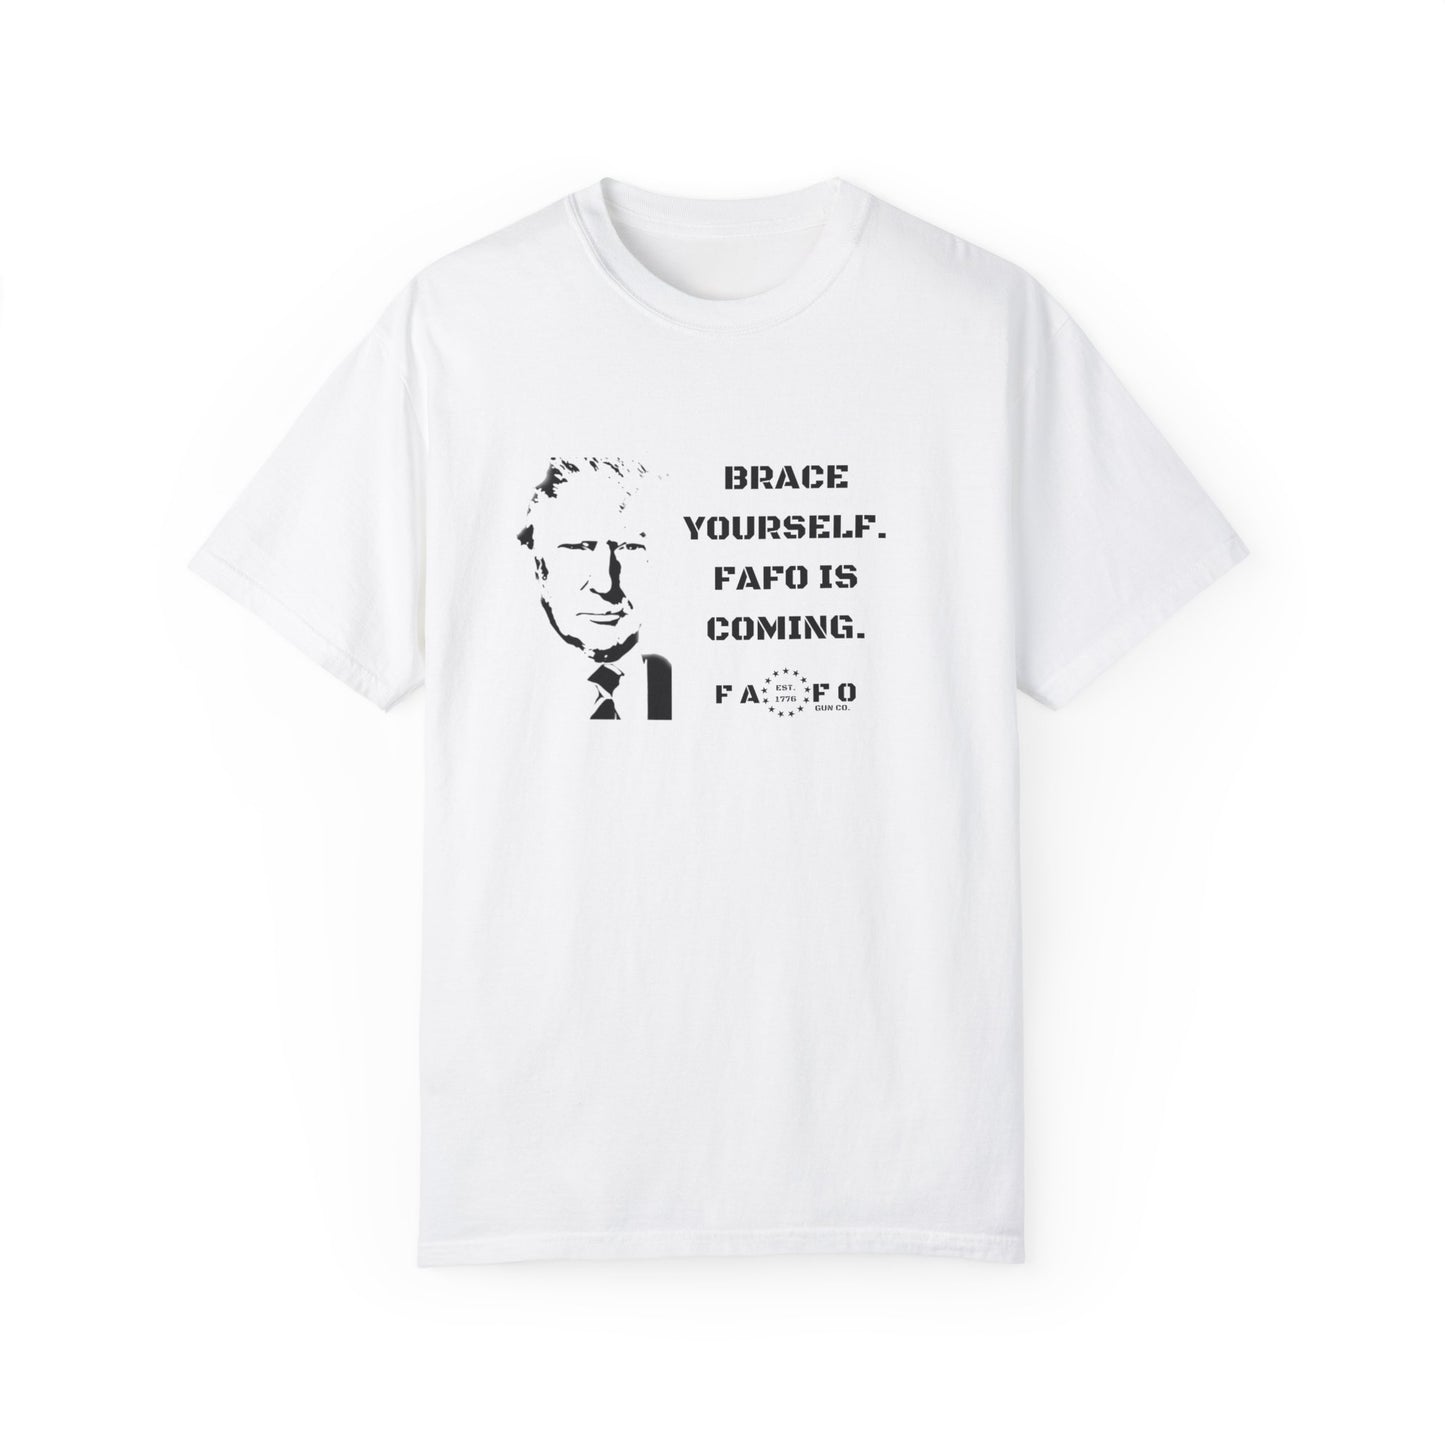 Unisex "Brace Yourself" T-shirt